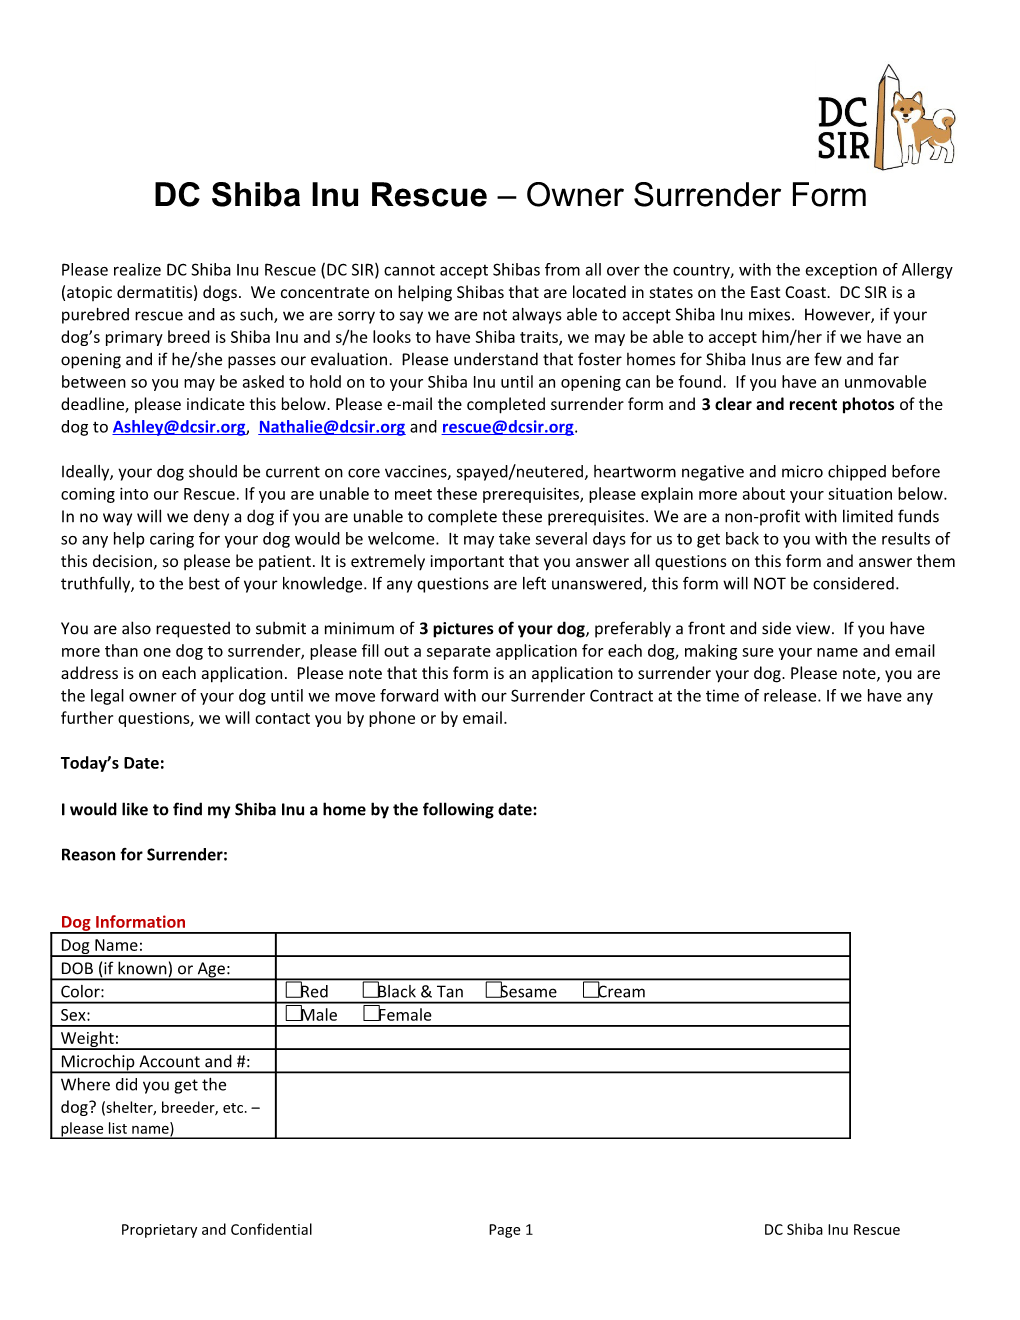 DC Shiba Inu Rescue Owner Surrender Form